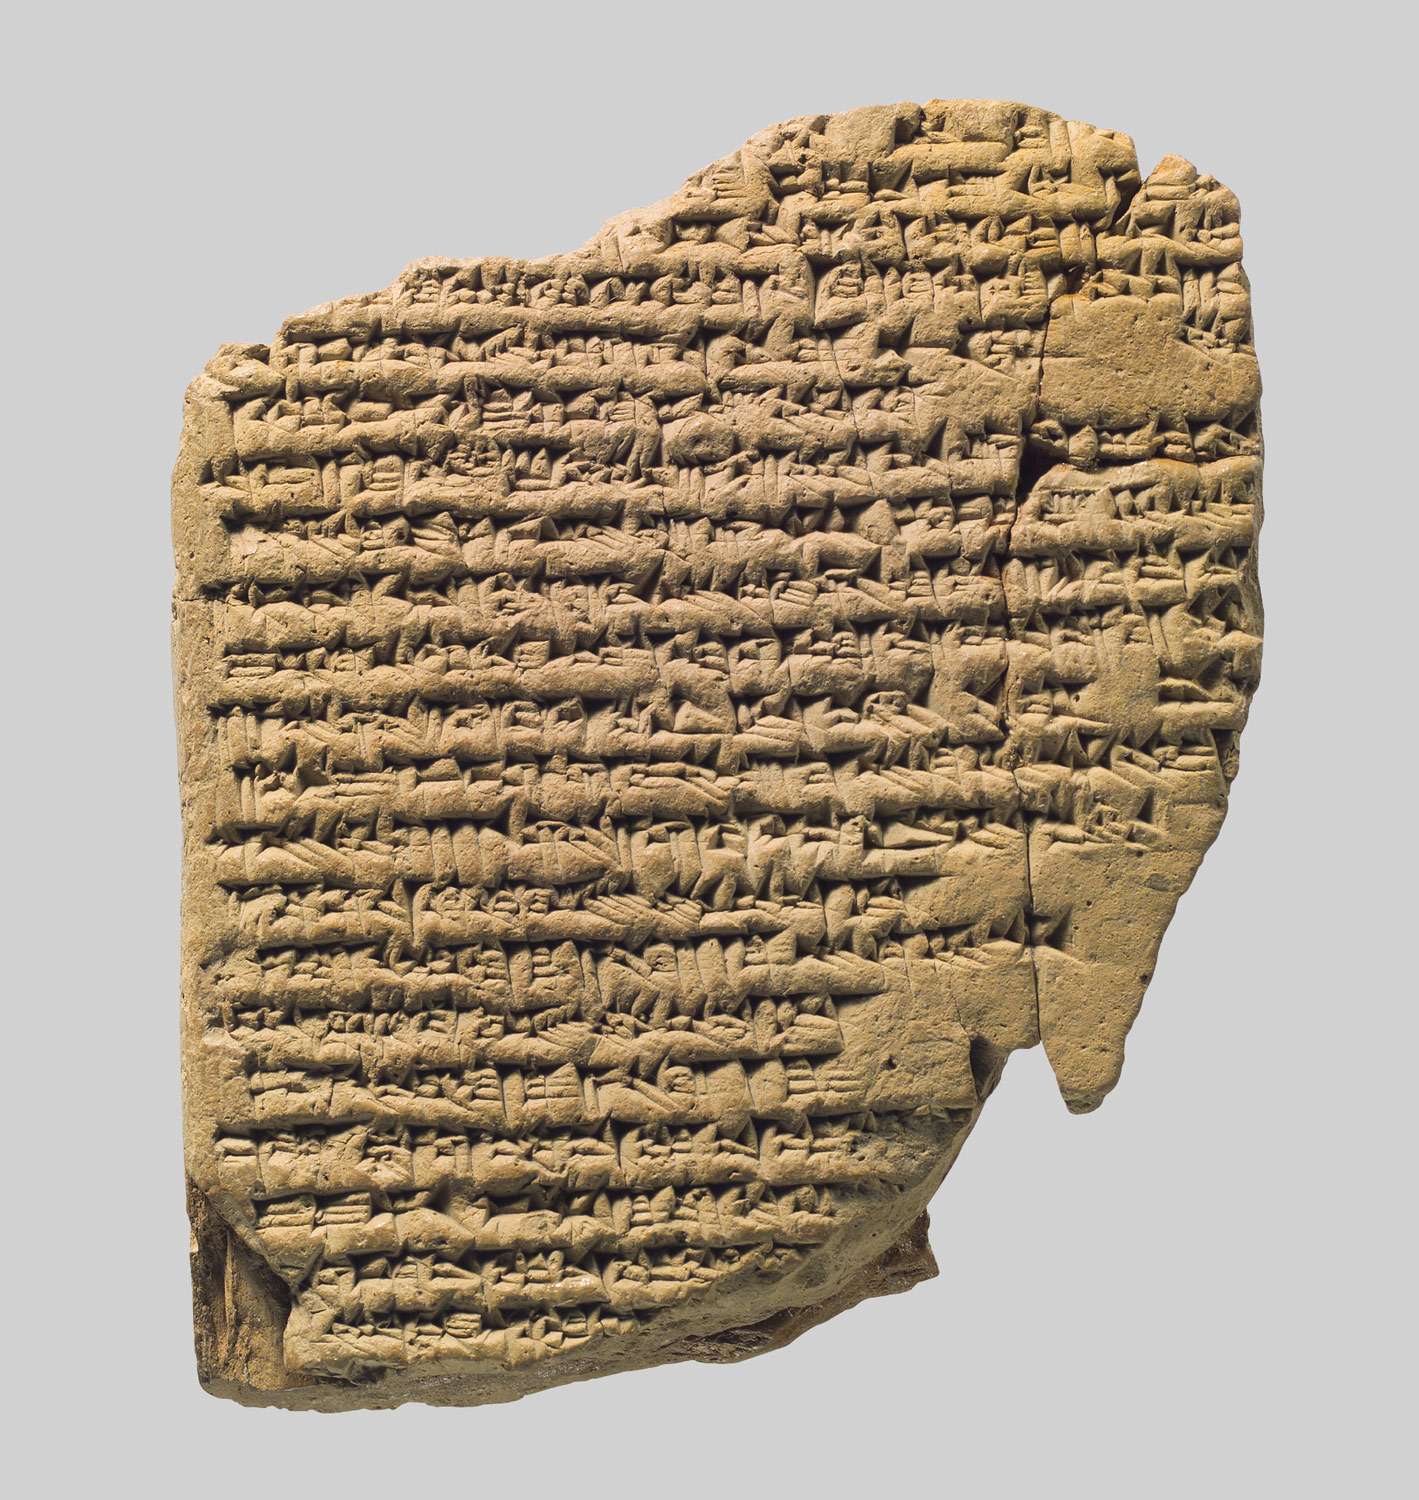 Cuneiform tablet: a-she-er gi-ta, balag to Innin/Ishtar